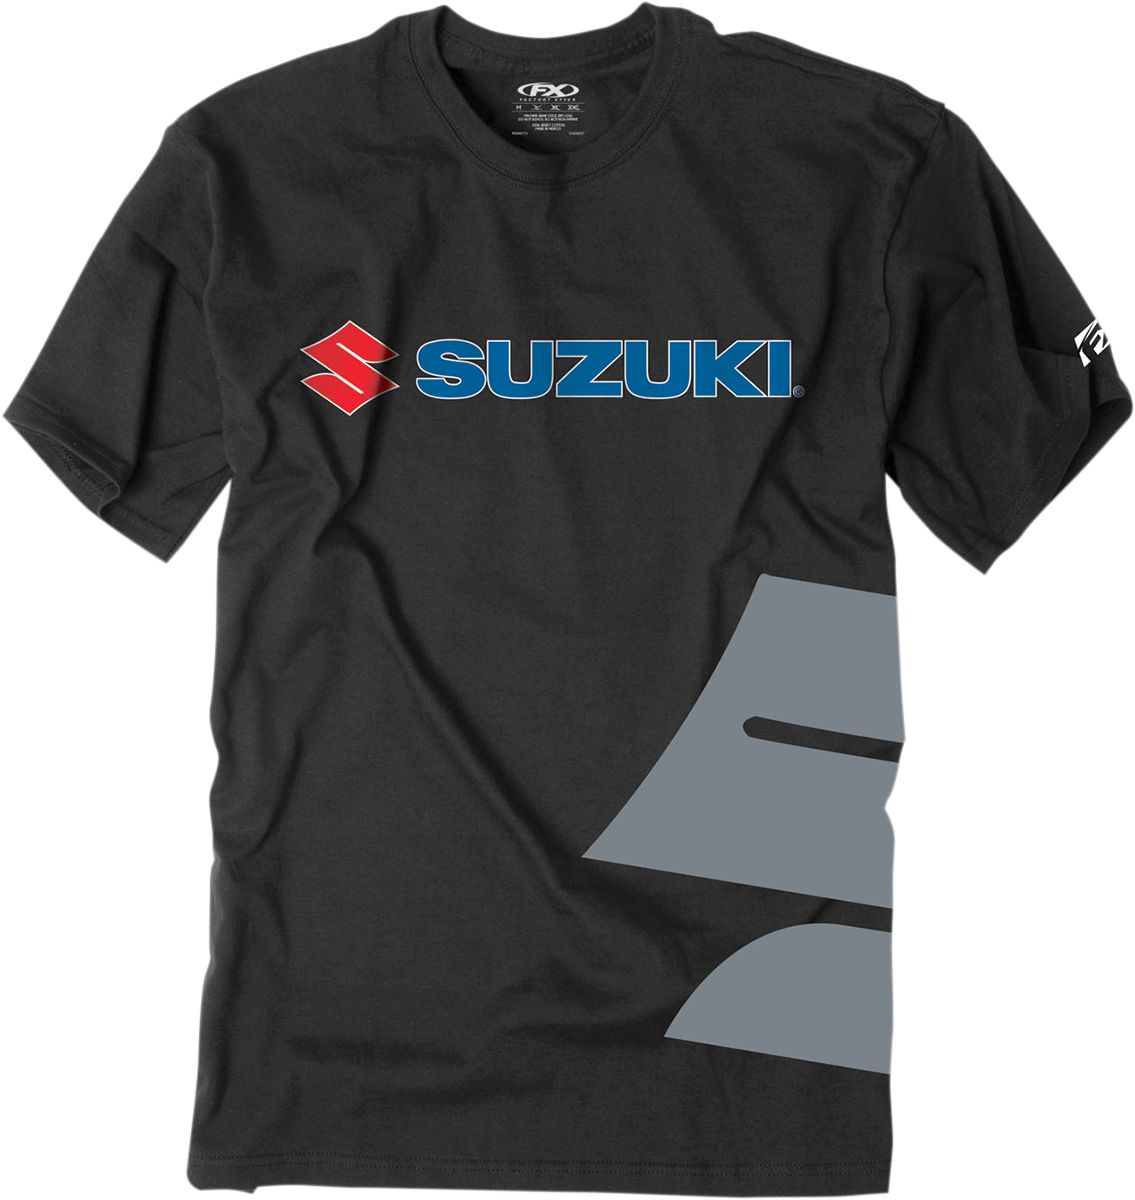 FACTORY EFFEX Suzuki Big S T-Shirt - Black - 2XL 15-88476